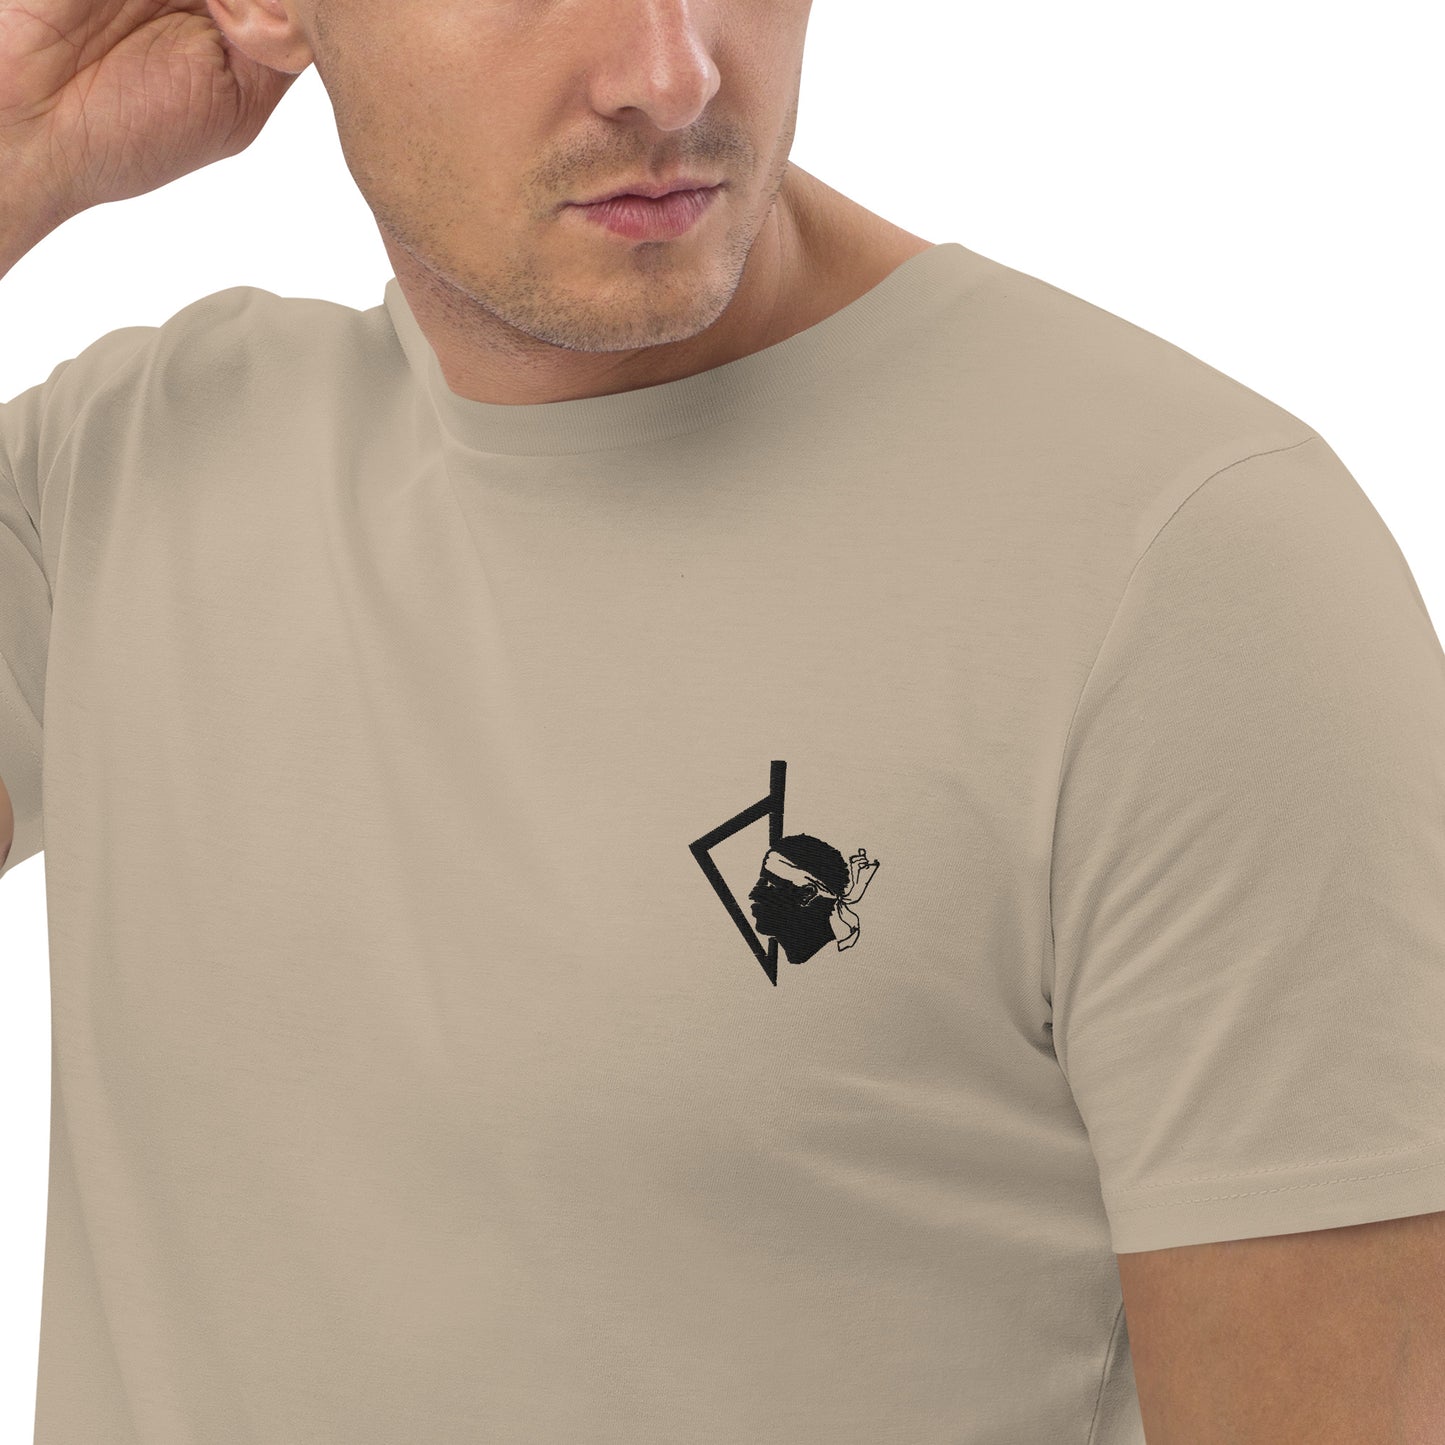 T-shirt unisexe en coton bio Corse Stylisée & Tête de Maure - Ochju Ochju Desert Dust / S Ochju T-shirt unisexe en coton bio Corse Stylisée & Tête de Maure